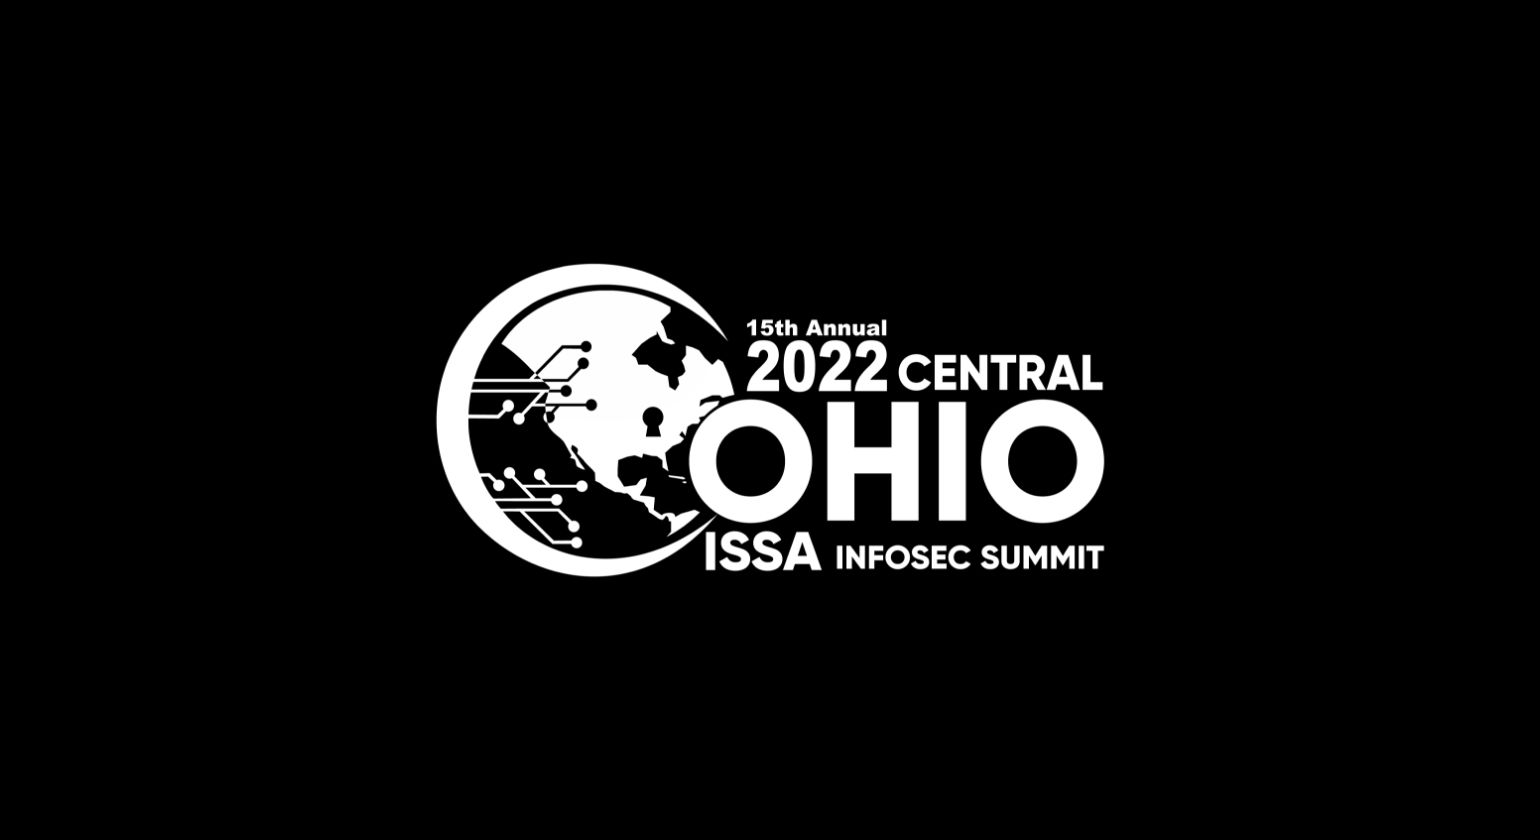 2022 Central Ohio ISSA INFOSEC Summit logo